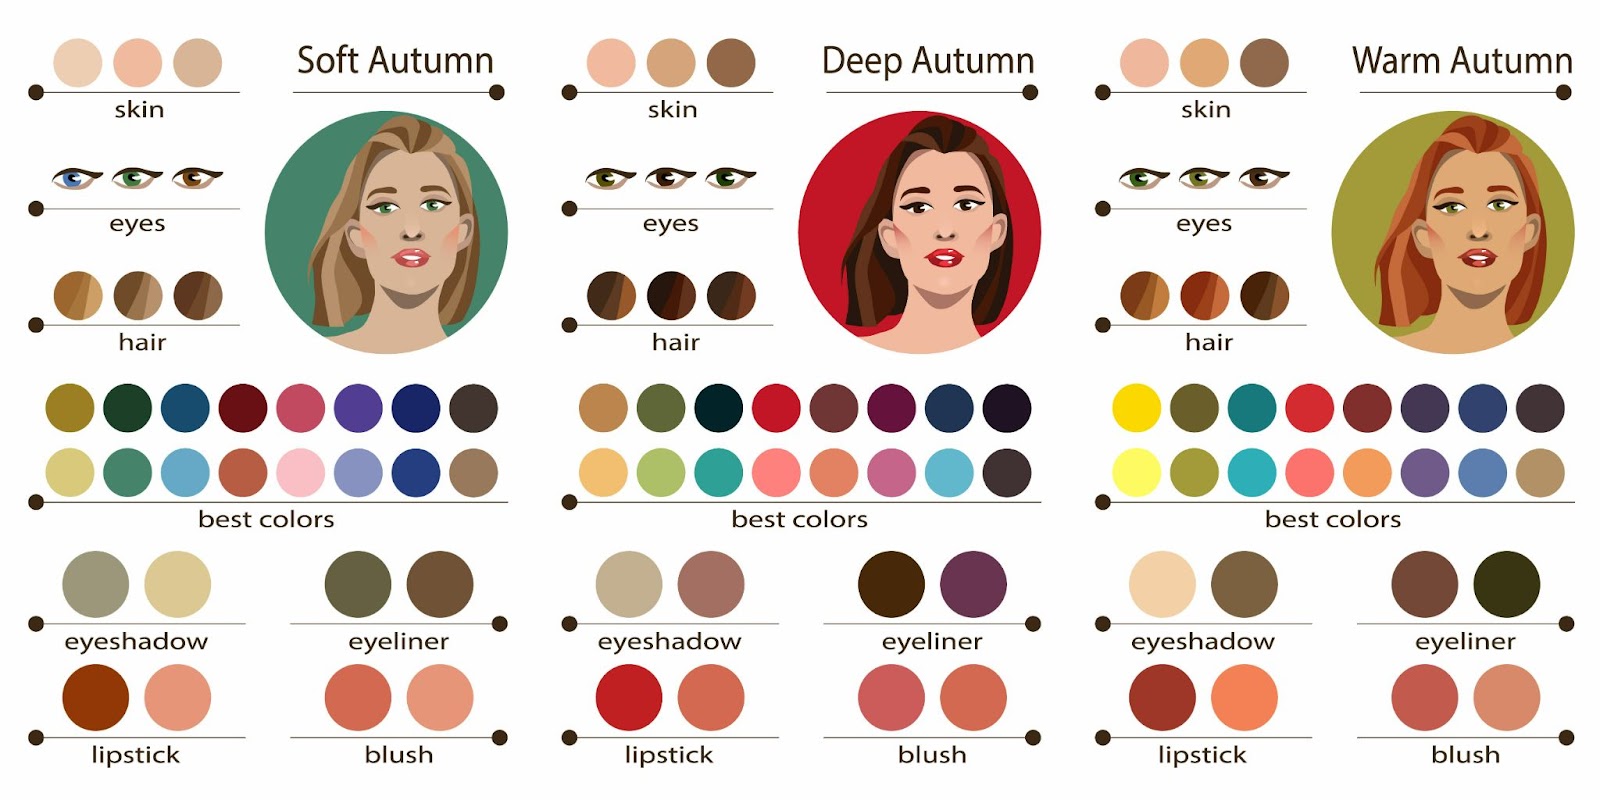 A 4 seasons color analysis palette for warm autumn, soft autumn and deep autumn